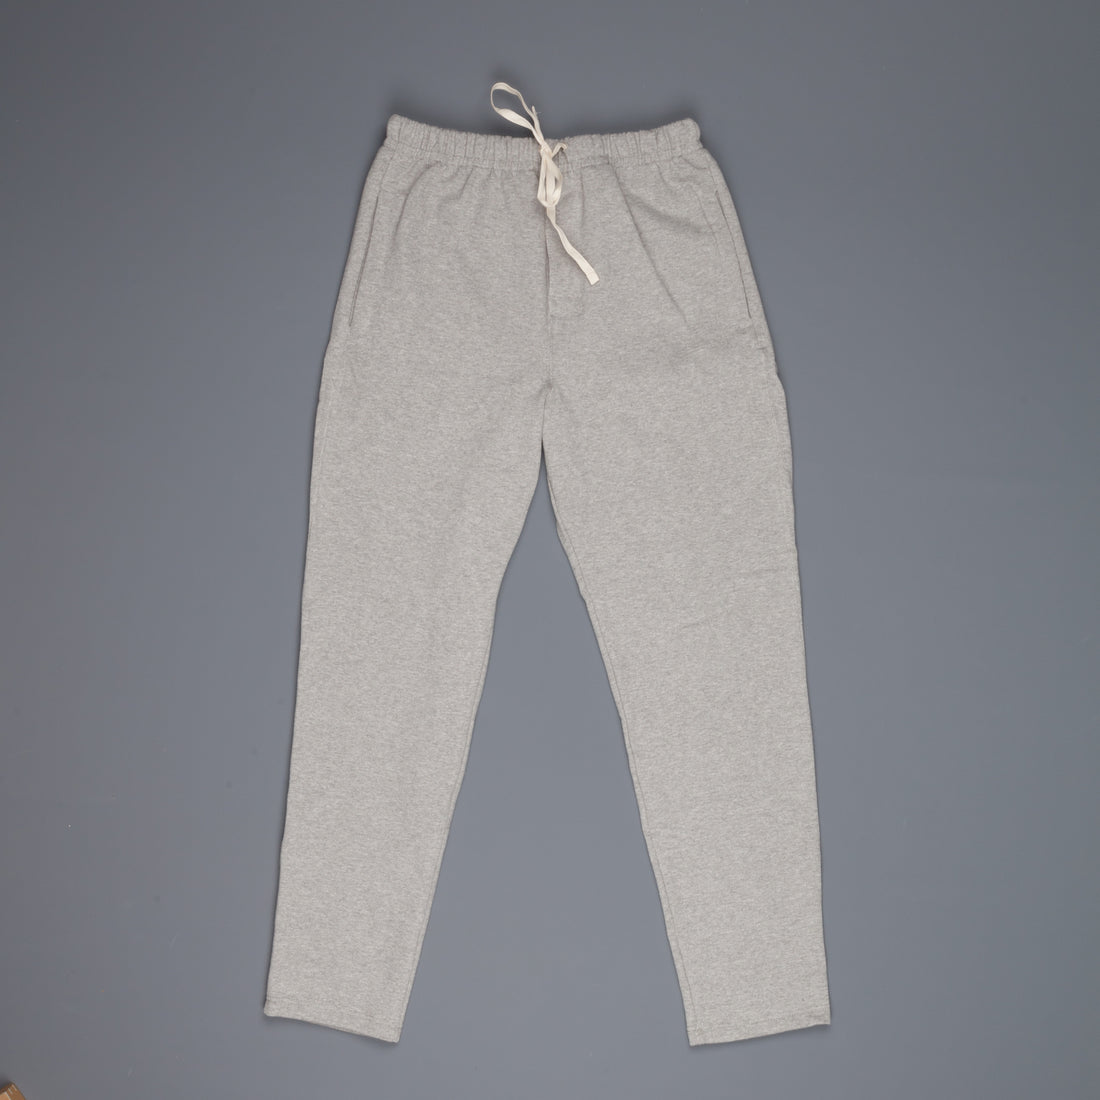 Merz B Schwanen Sweatpants 3S50 open leg Grey Melange – Frans Boone Store